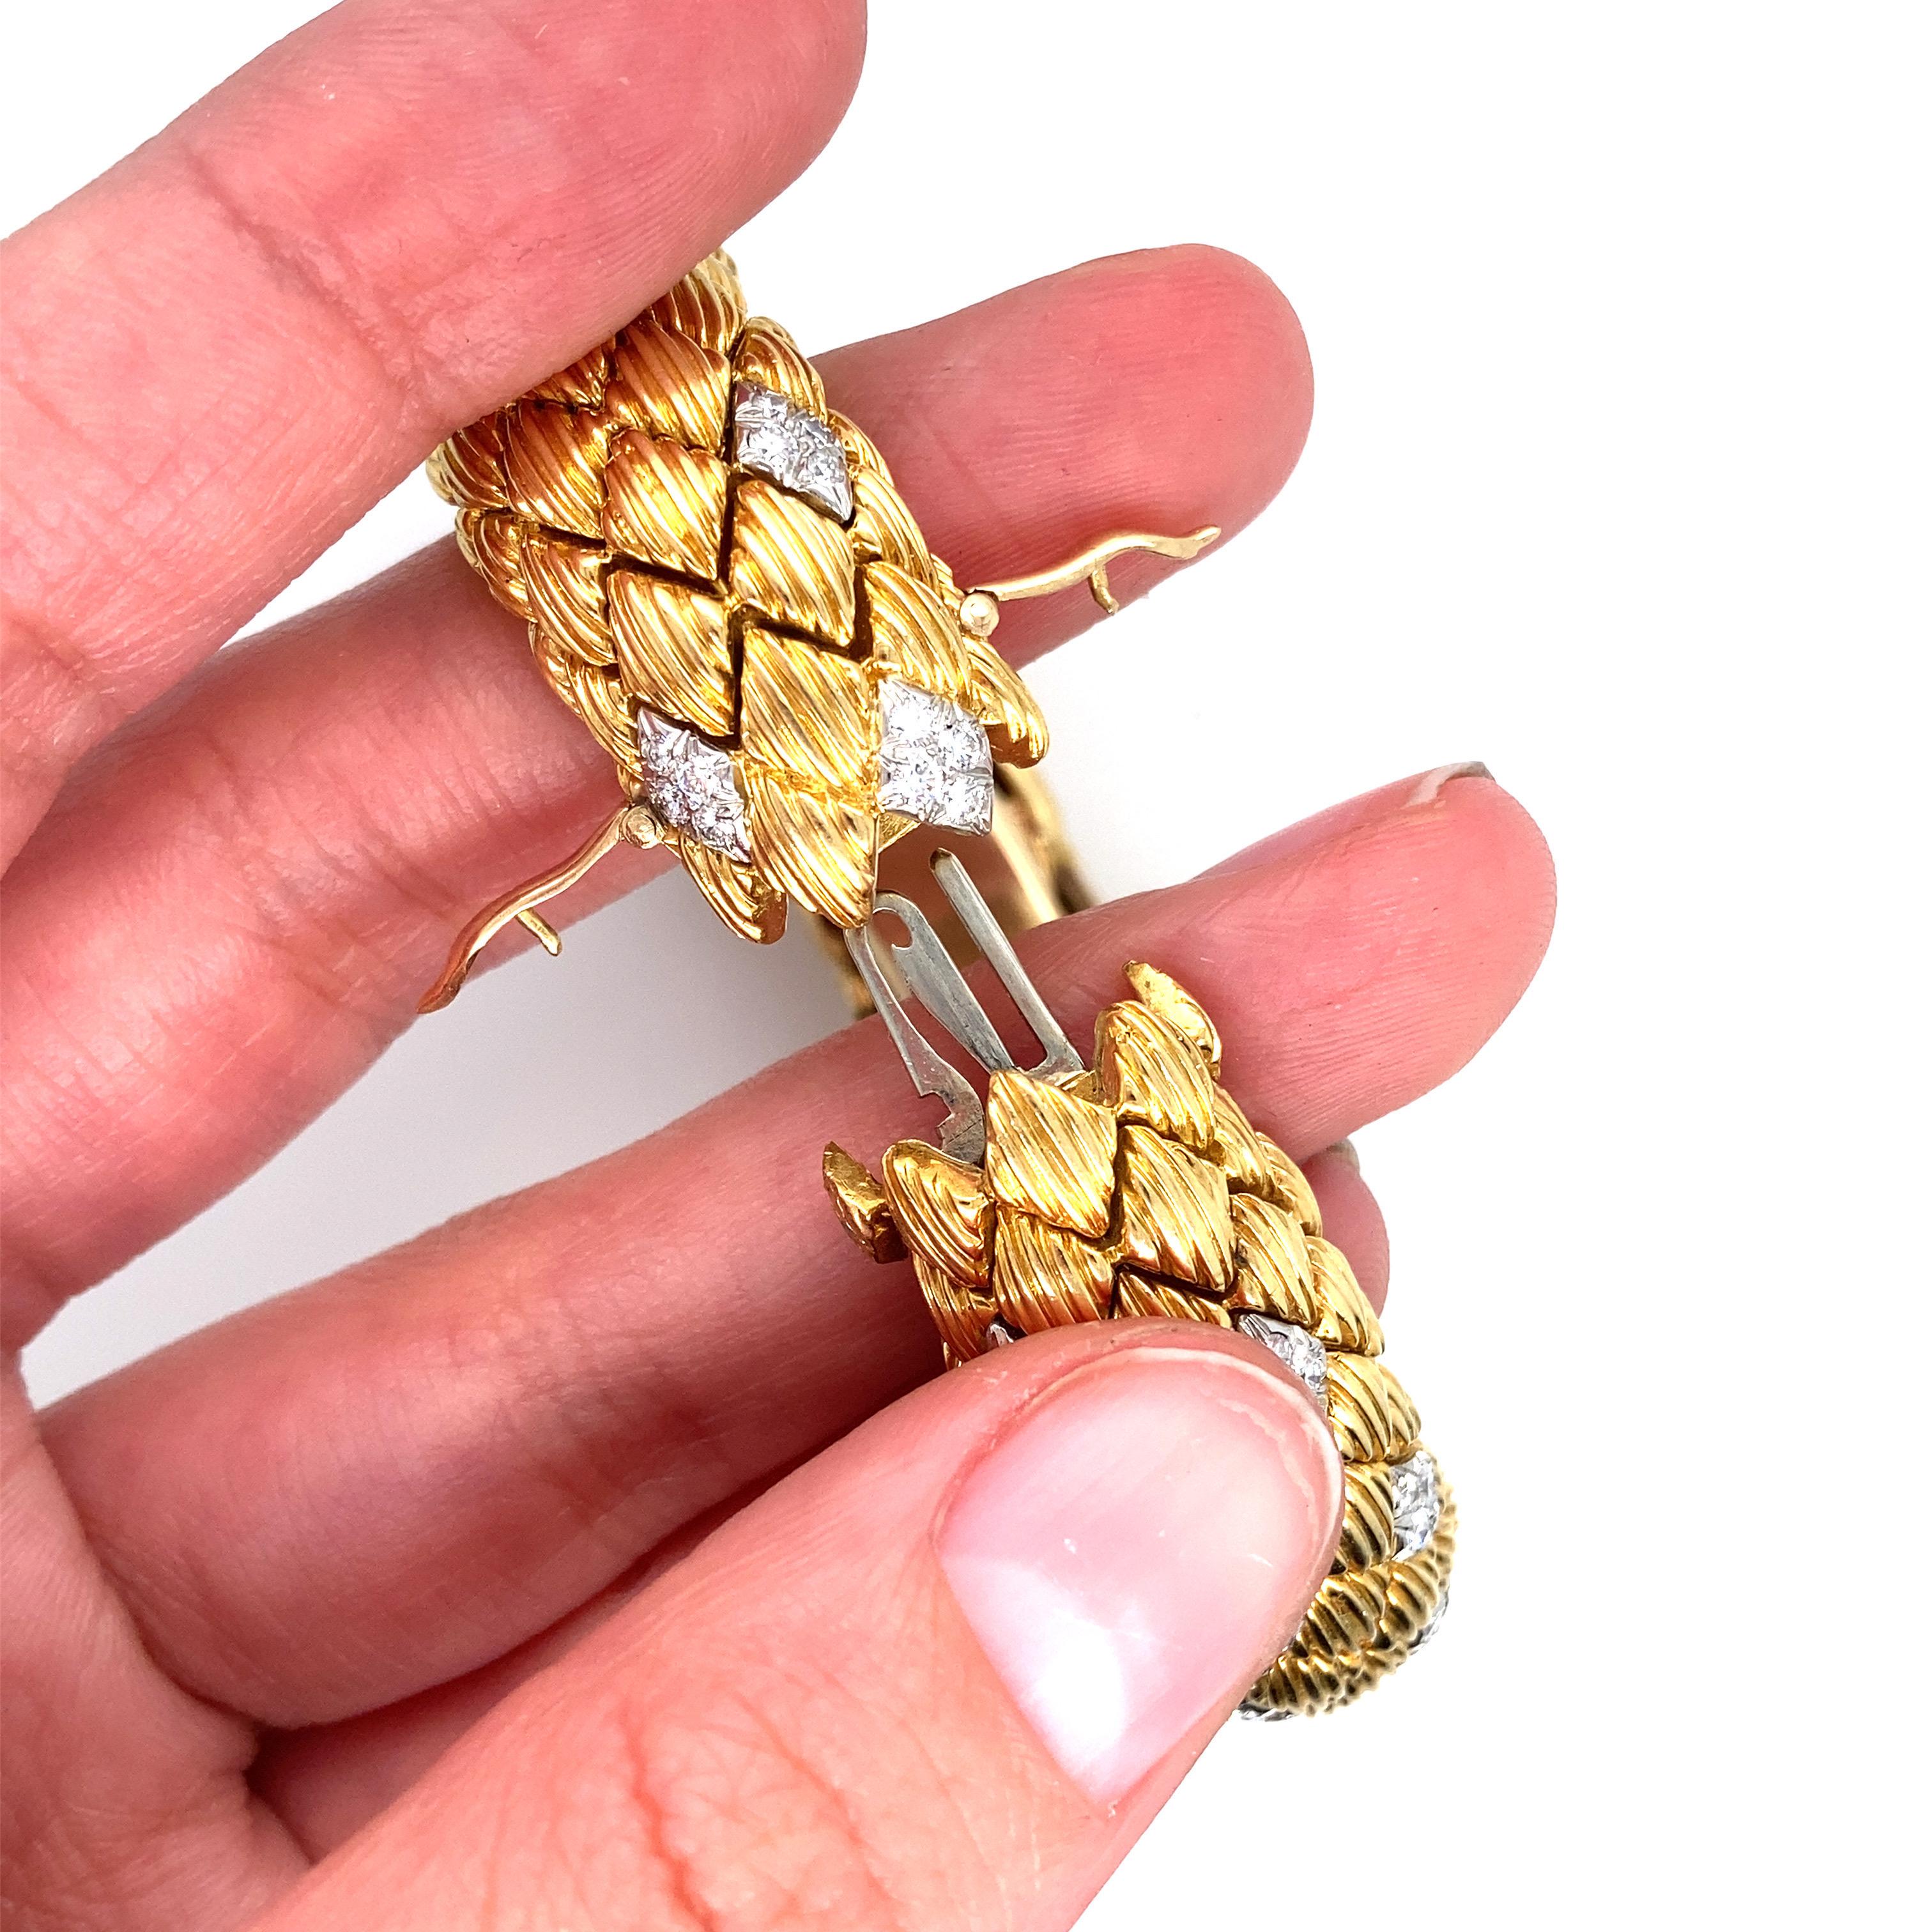 Vintage 18k Yellow Gold Bracelet with Diamonds and Peek-A Boo Swiss Geneva Watch For Sale 1